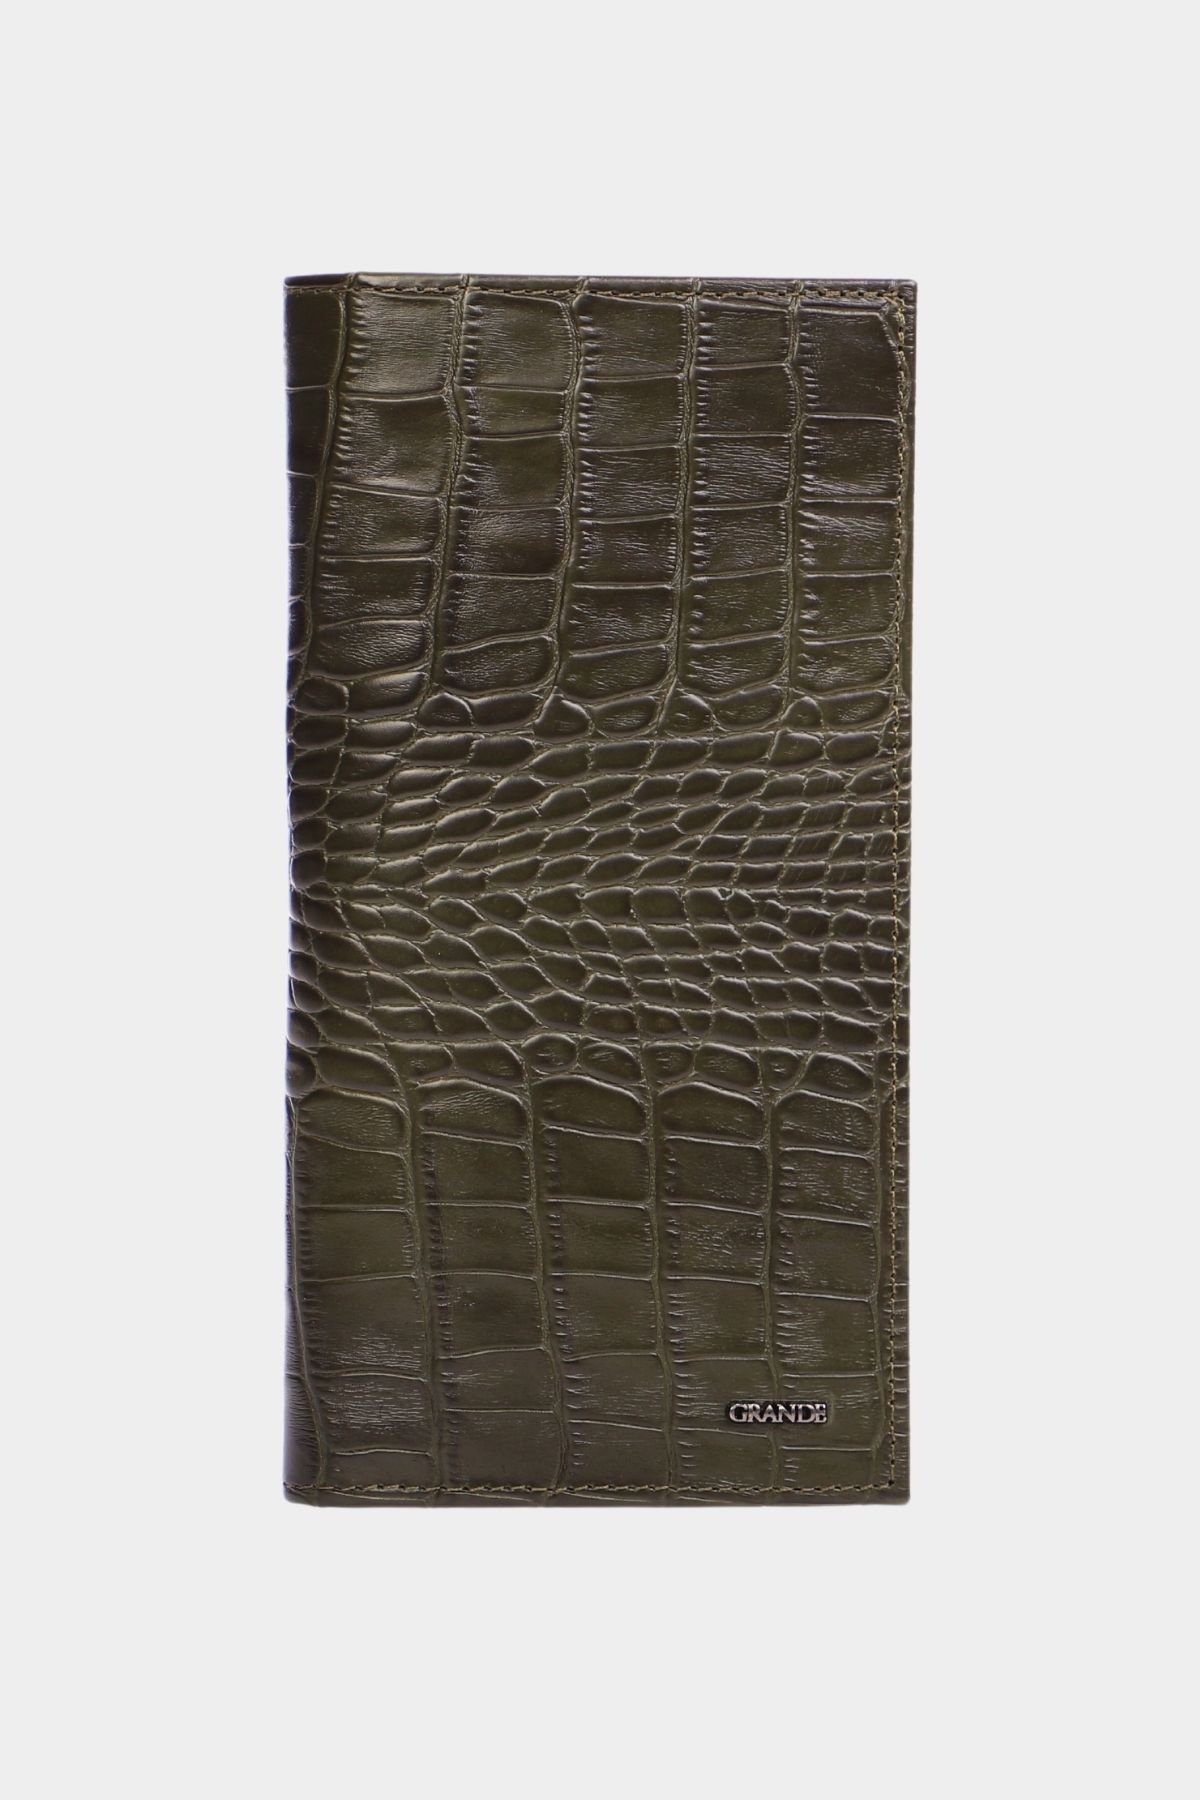 Grande 1764 Genuine Leather Unisex Wallet